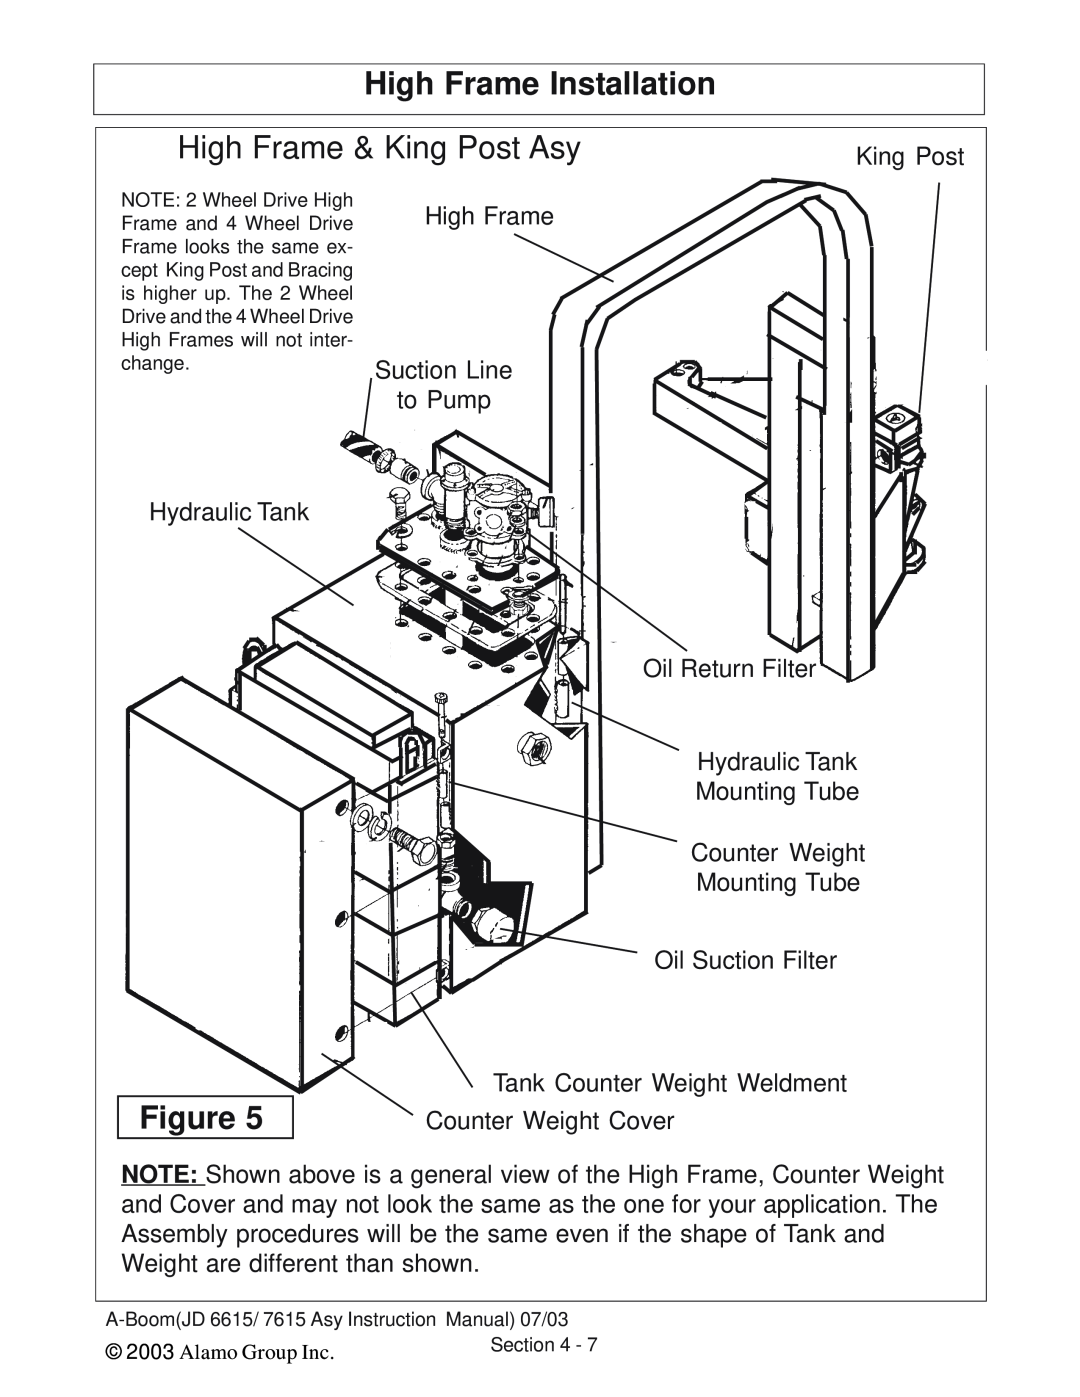 Alamo DSEB-D16/SAS instruction manual High Frame & King Post Asy, High Frame Installation 